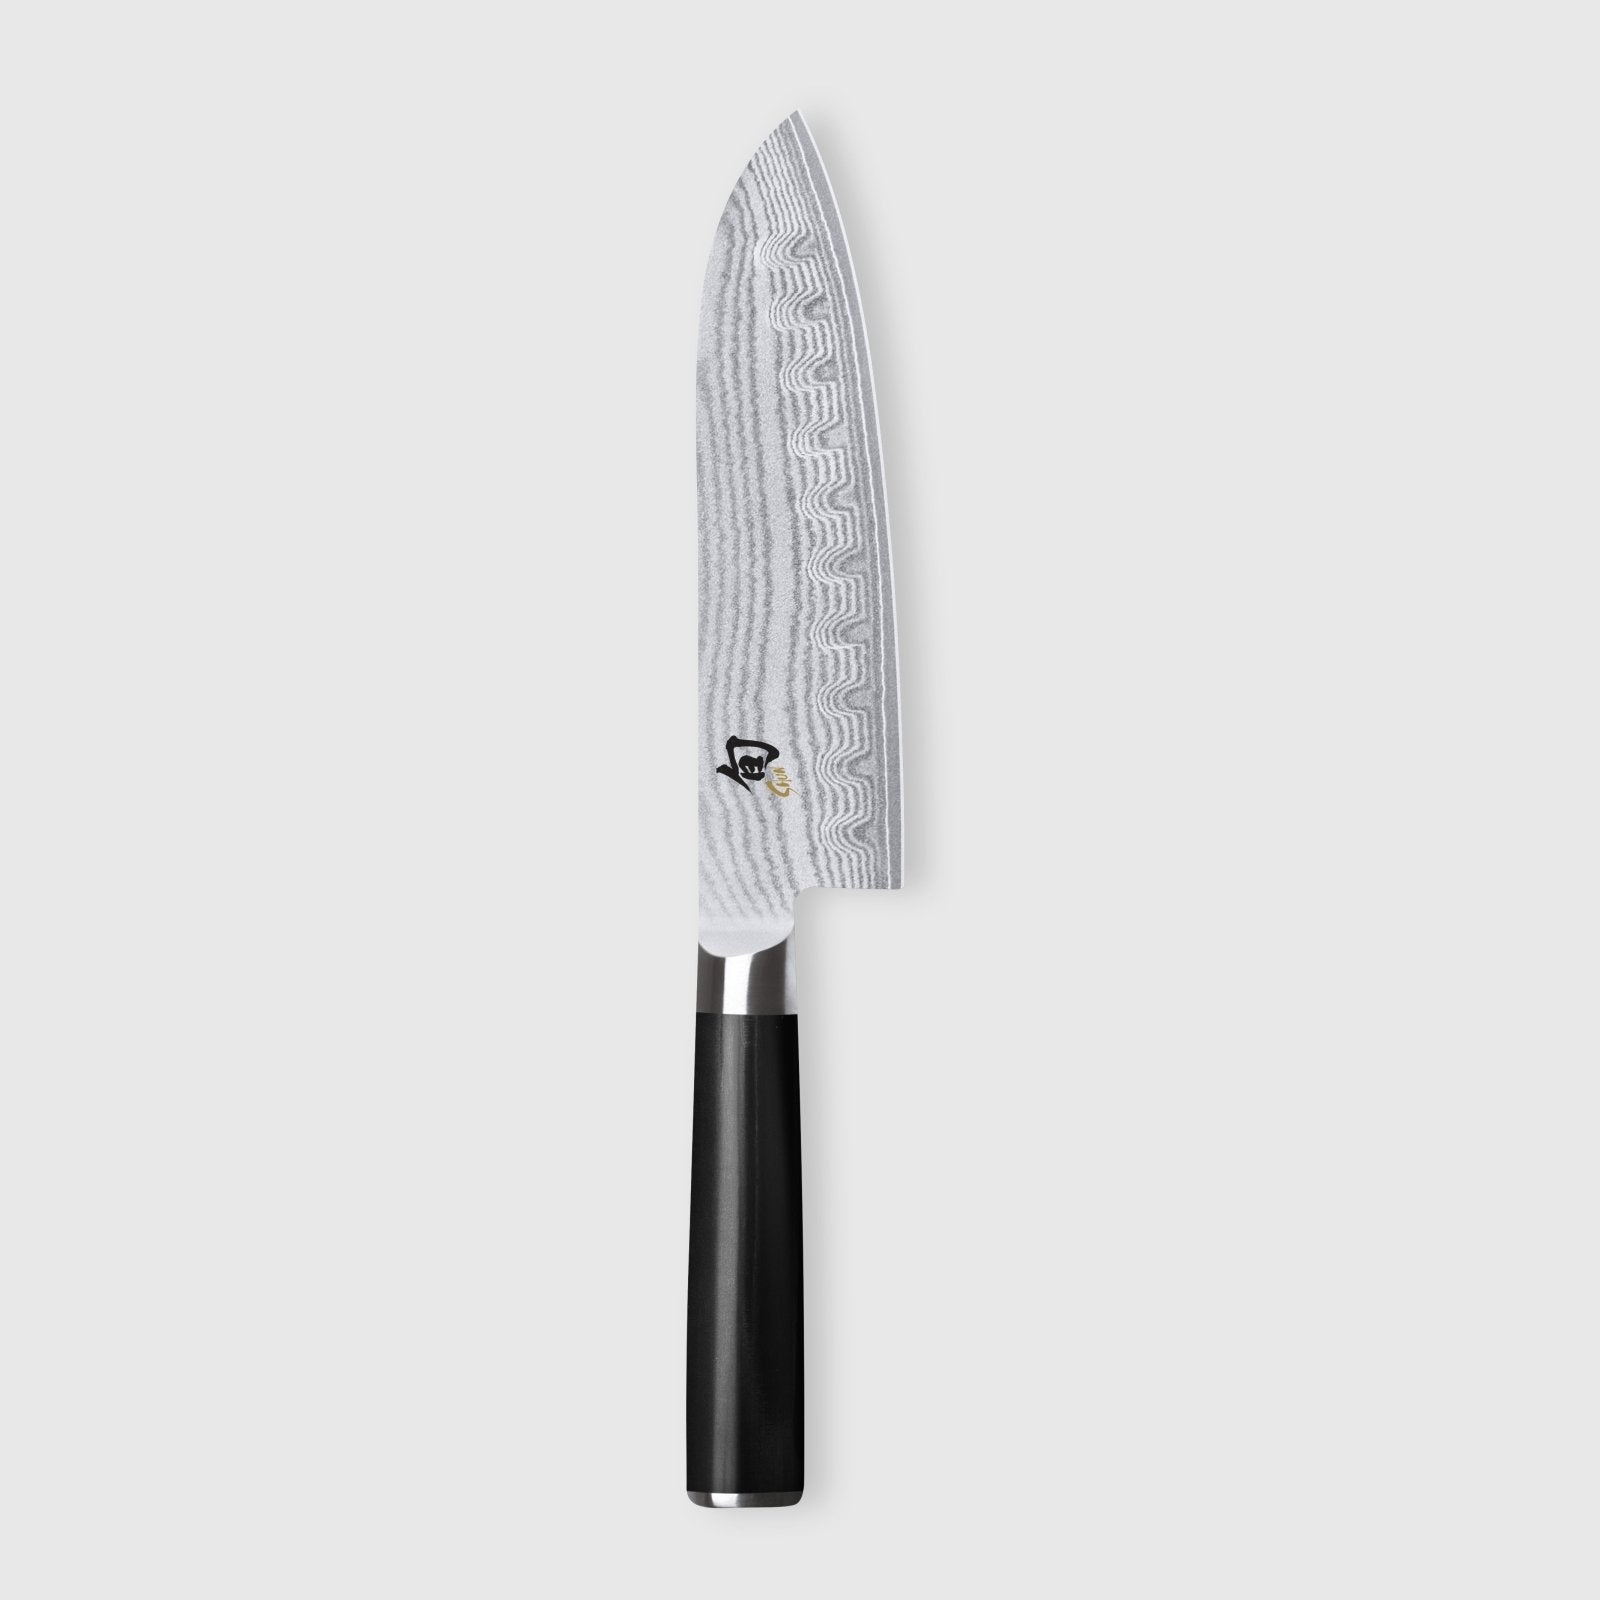 KAI Shun 18cm Scalloped Santoku Knife - KAI-DM-0718 - The Cotswold Knife Company